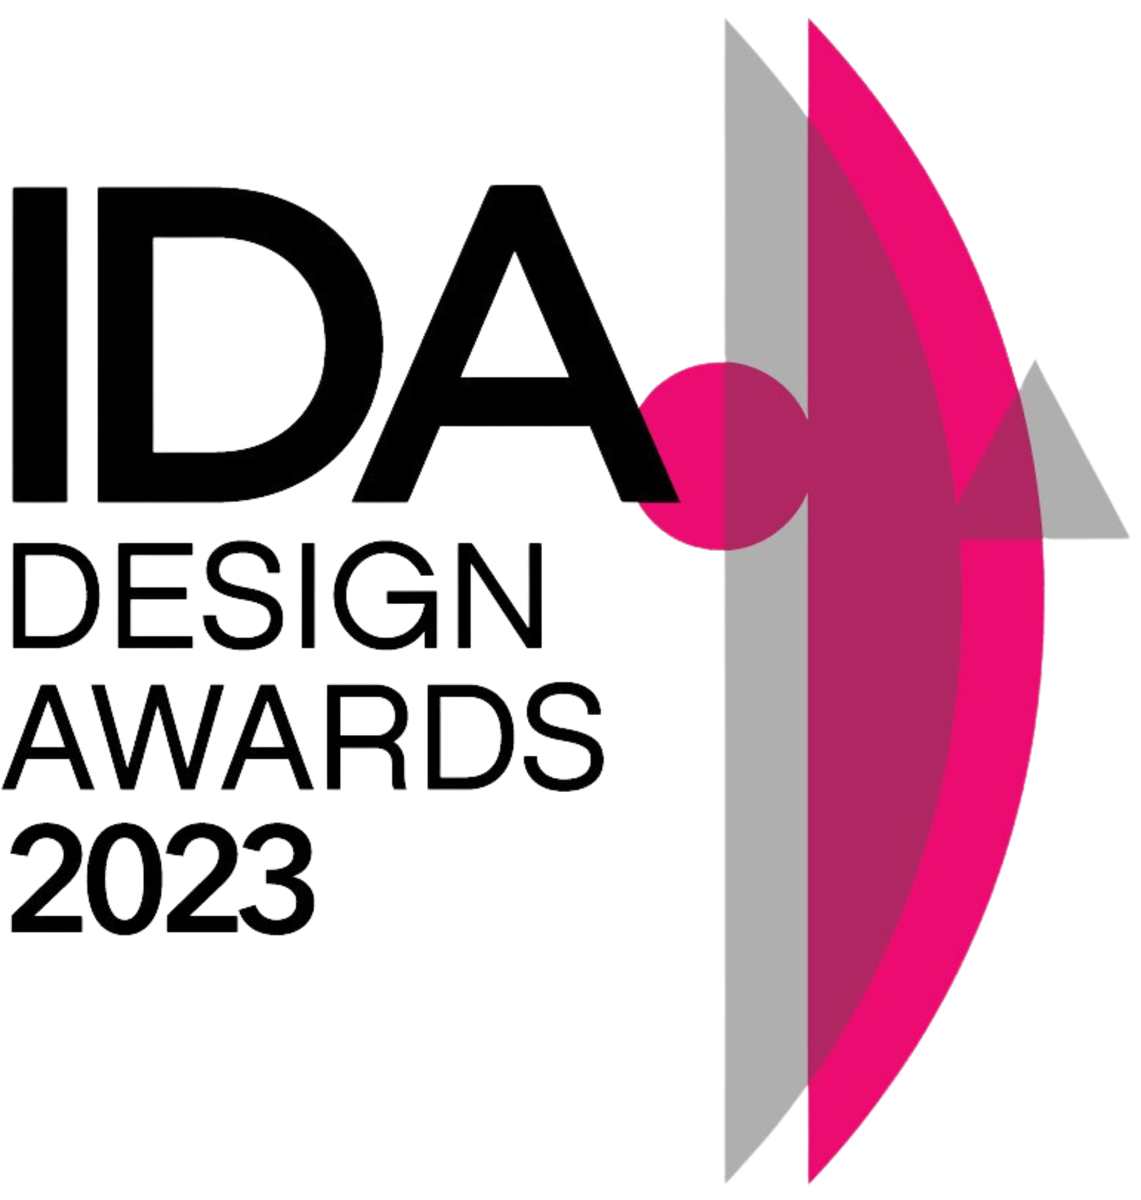 Entries sought for International Design Awards News